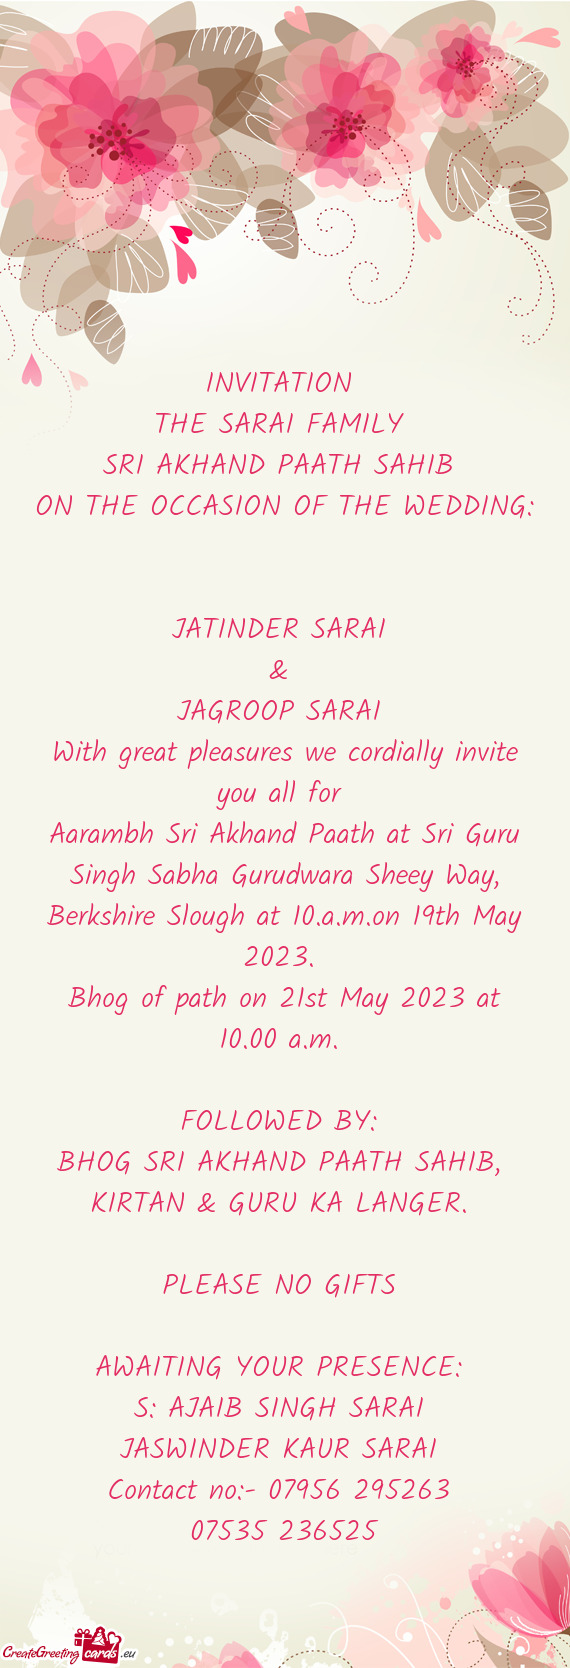 Aarambh Sri Akhand Paath at Sri Guru Singh Sabha Gurudwara Sheey Way, Berkshire Slough at 10.a.m.on